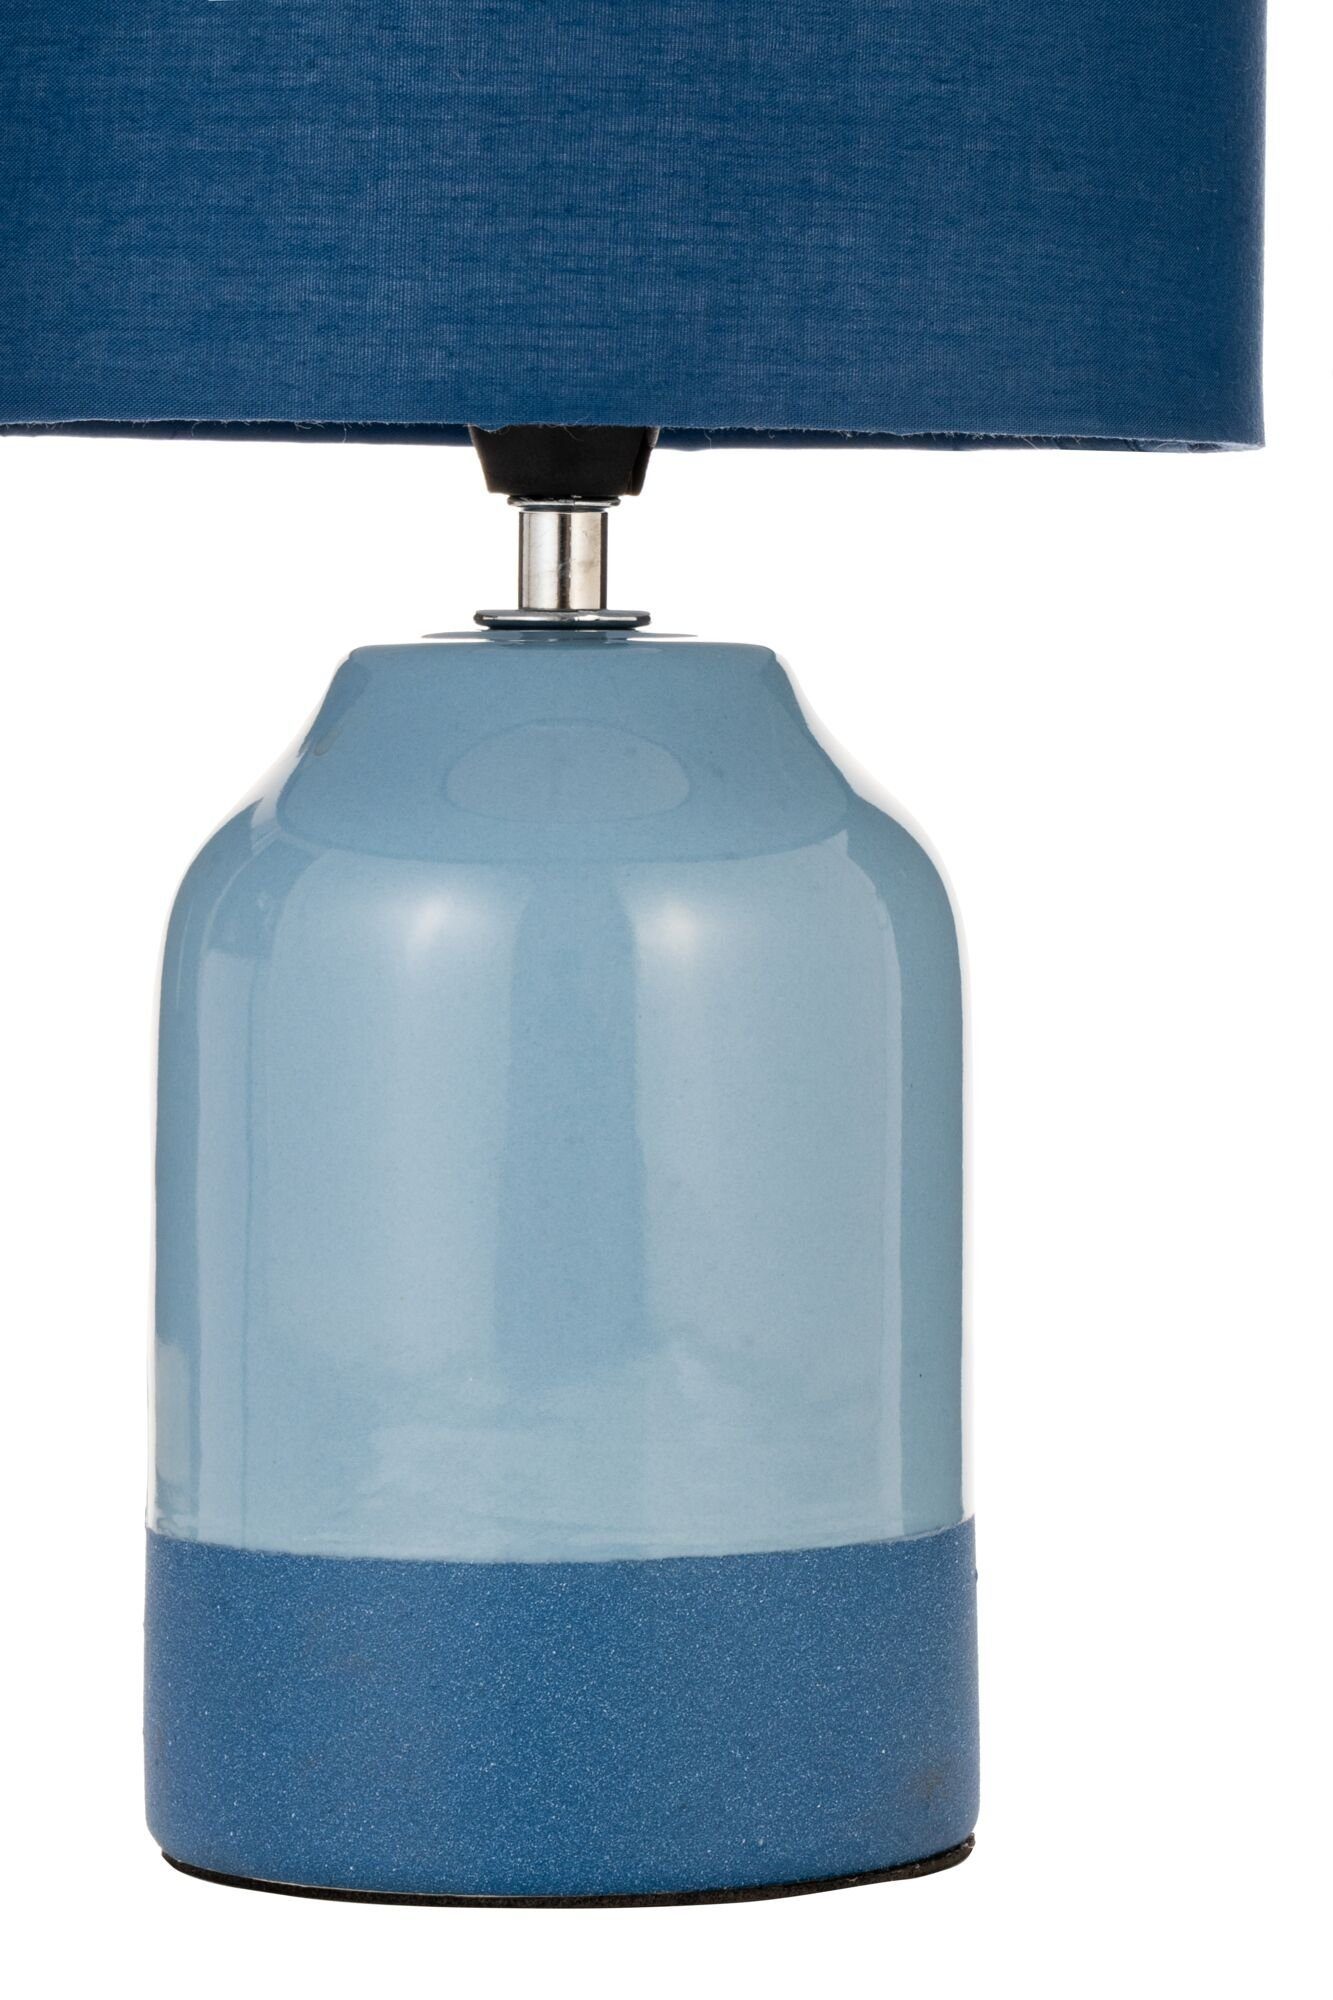 Pauleen Tischleuchte Sandy blue/ blue Stoff/Keramik, ohne Glow Leuchtmittel, 230V max20W E14